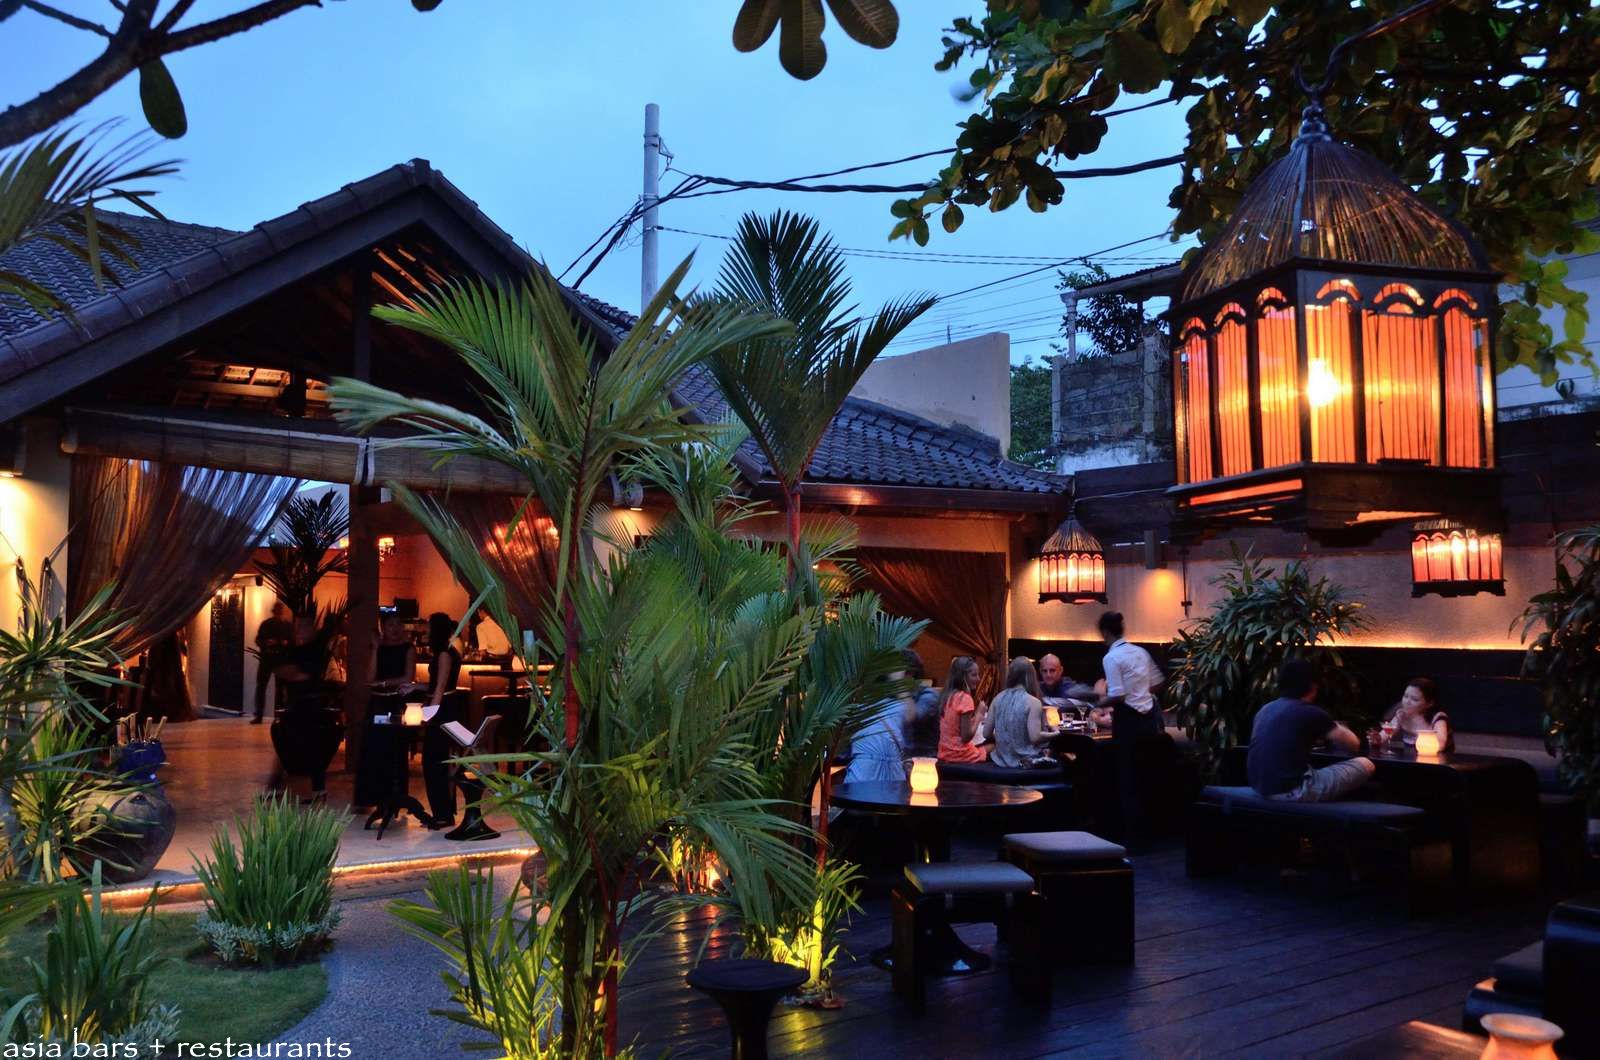 Sarong- acclaimed pan-Asian restaurant & bar-lounge in Bali | Asia Bars